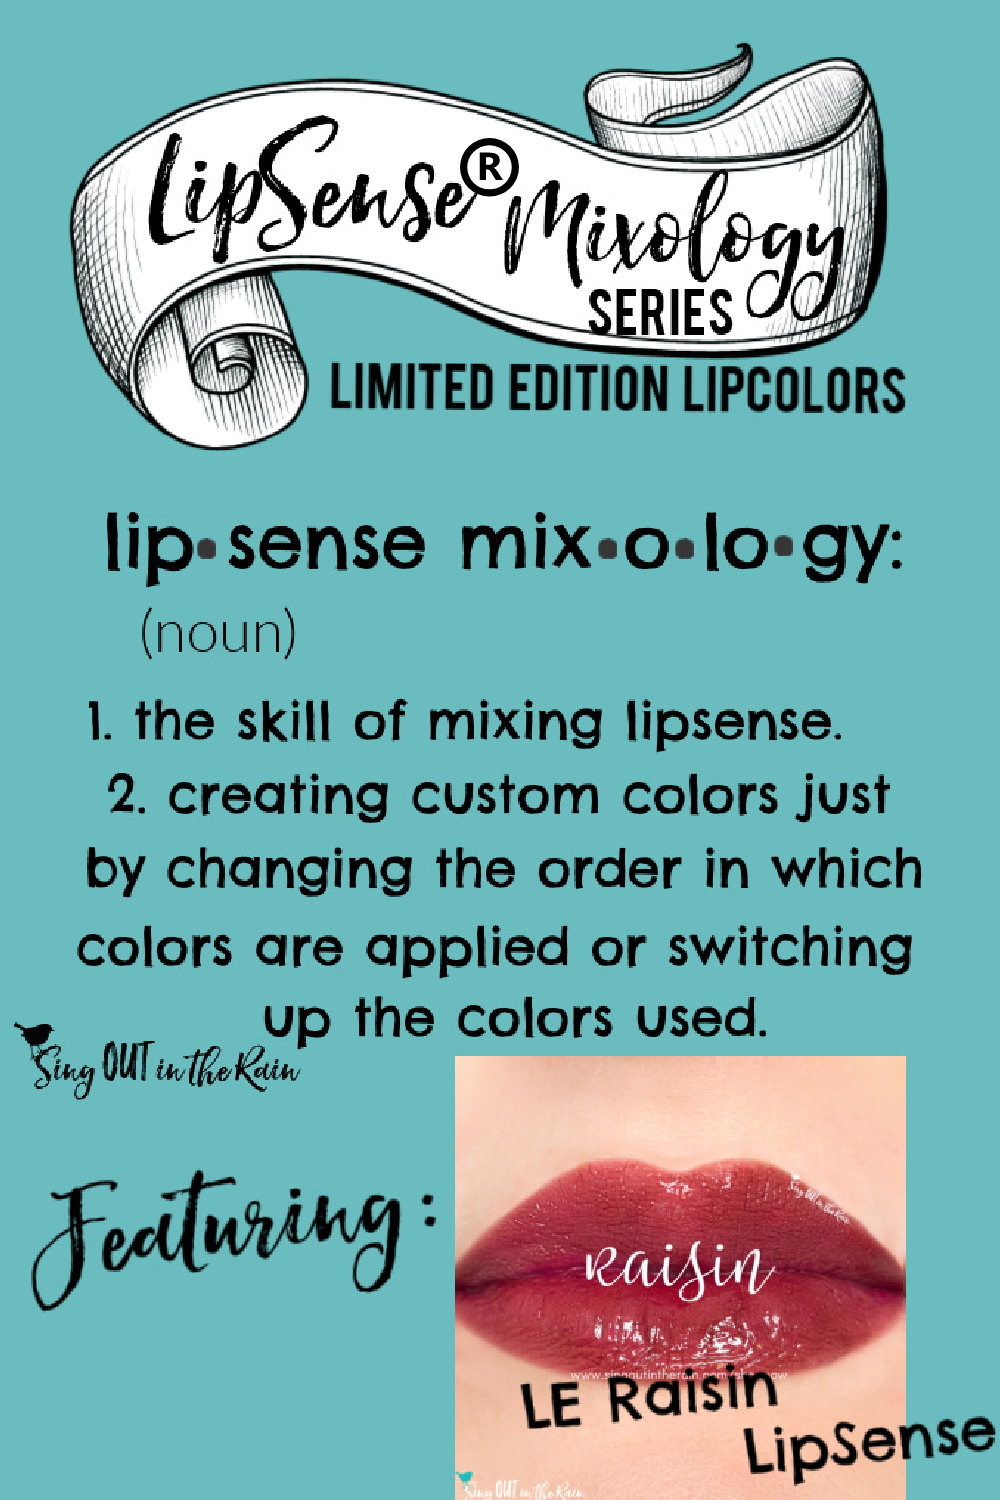 The Ultimate Guide to Raisin LipSense Mixology